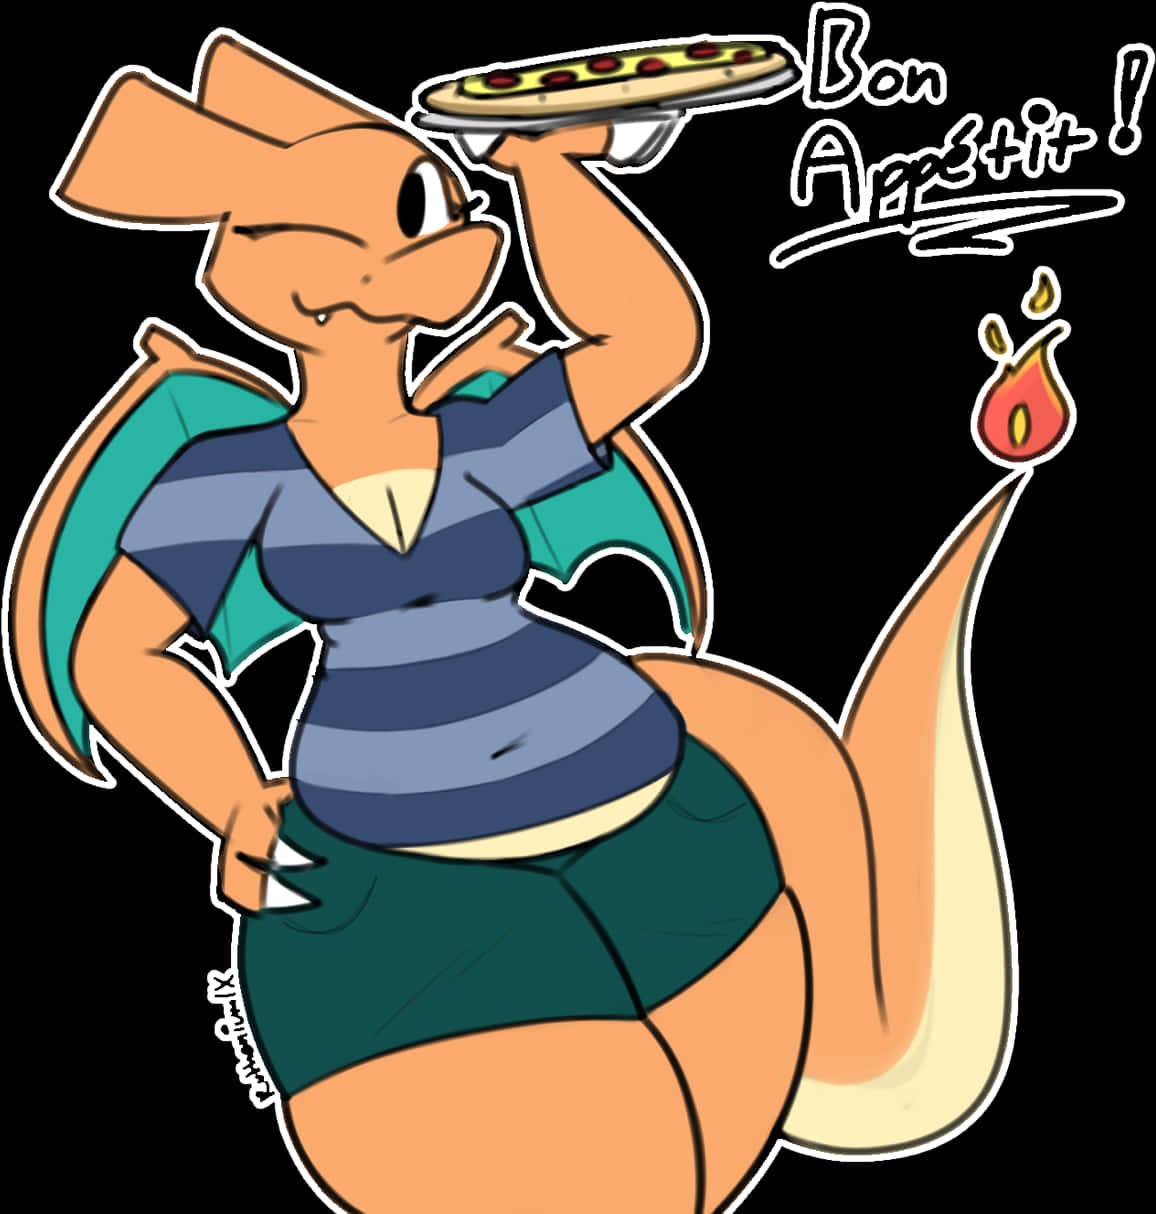 Anthropomorphic Dragon Eating Pizza PNG image